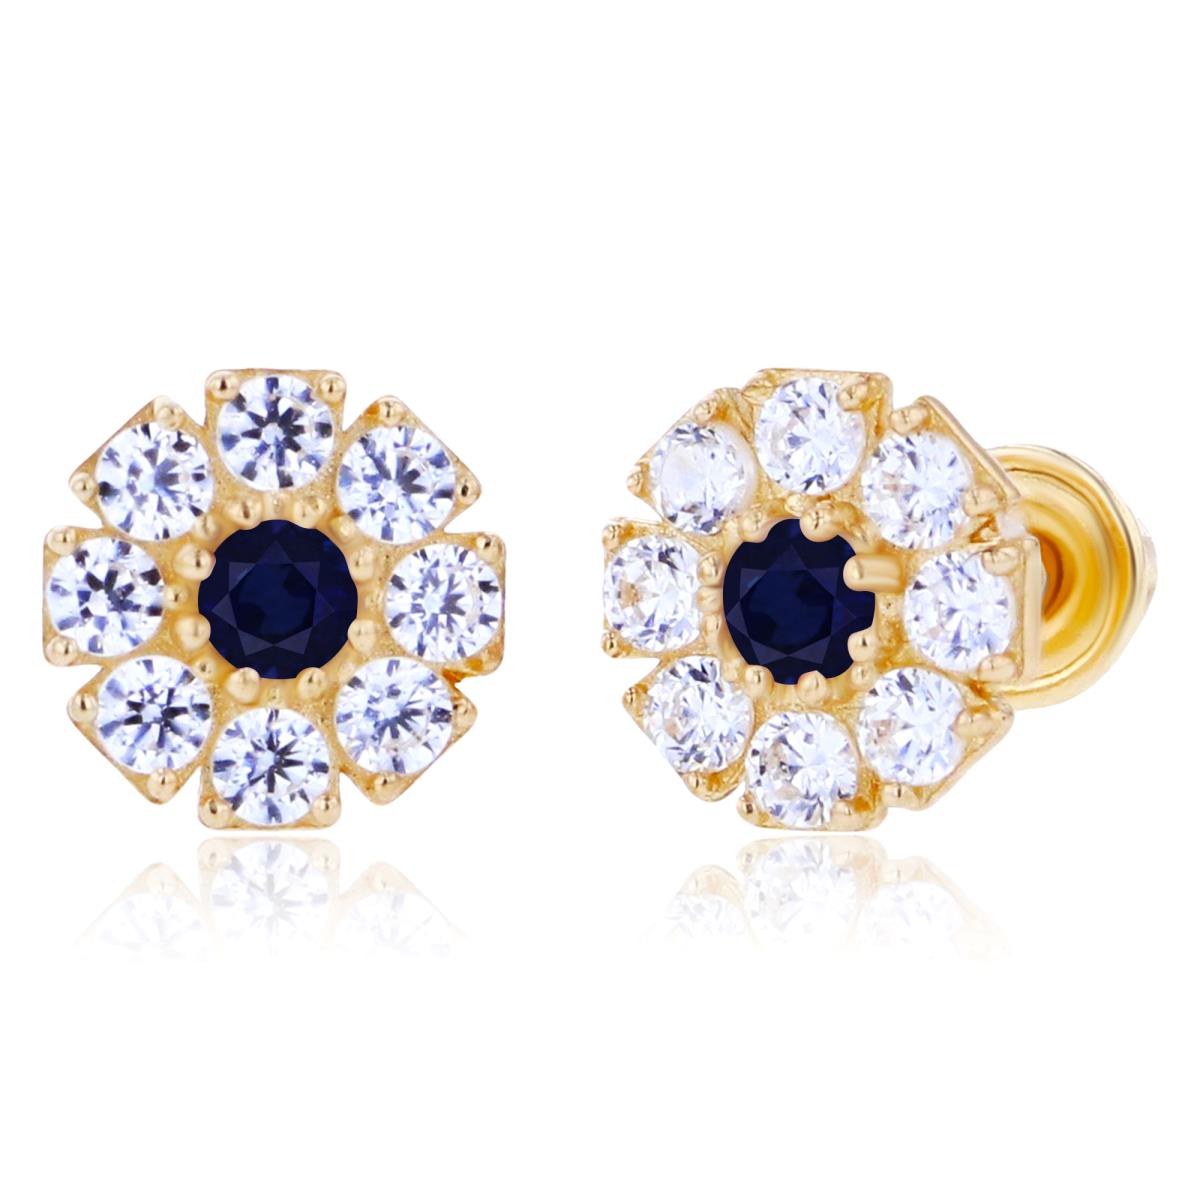 14K Yellow Gold 2mm Round Sapphire & 1.5mm Created White Sapphire Flower Screwback Earrings